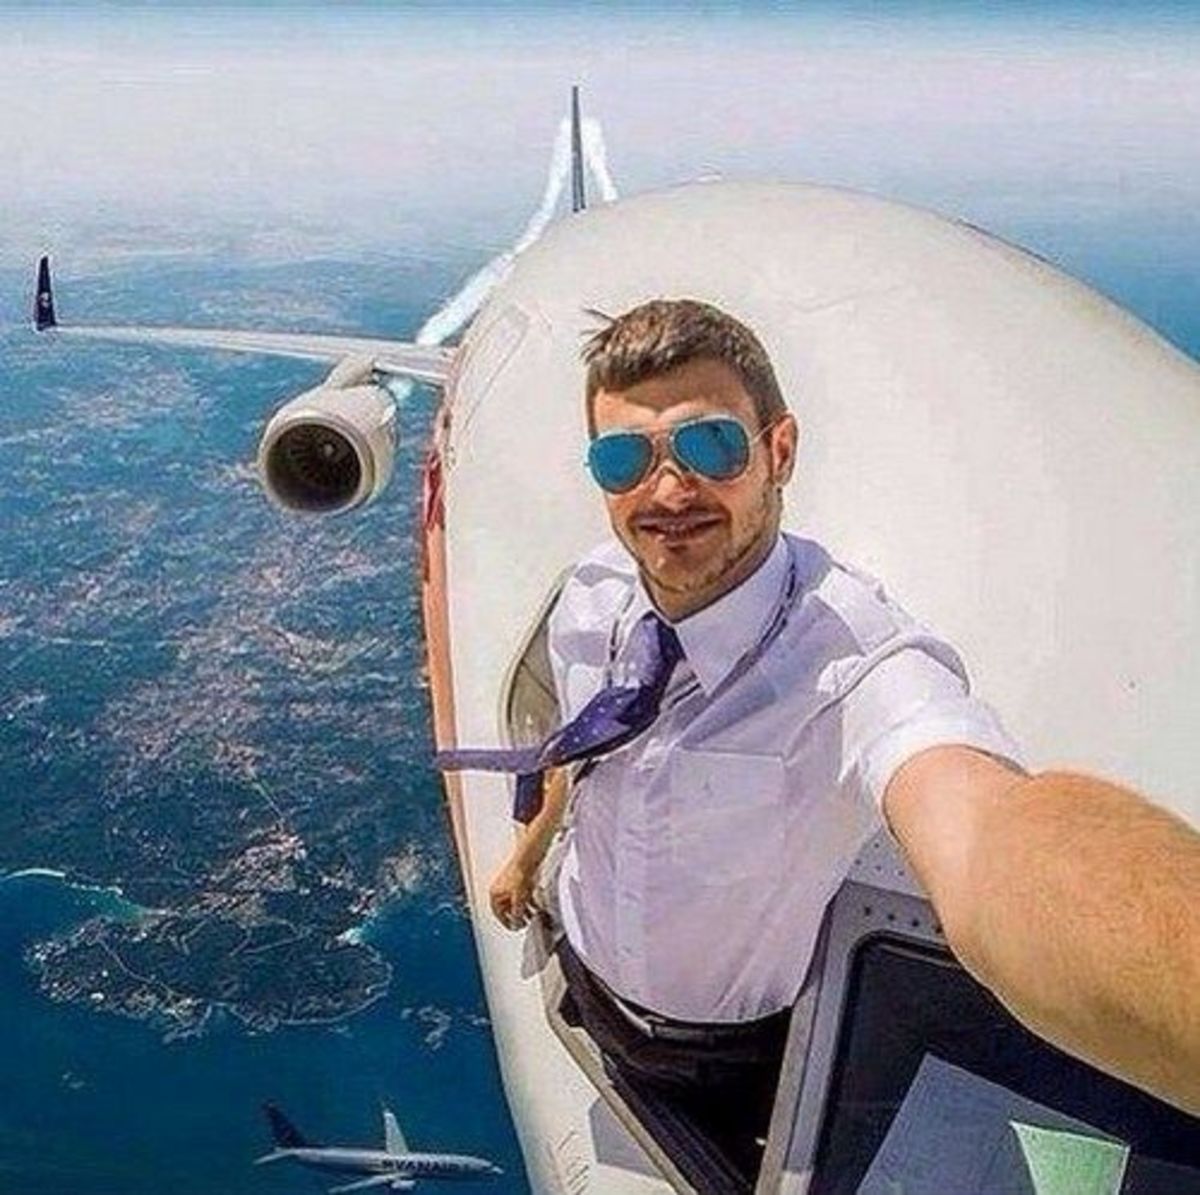 Dangerous Selfies